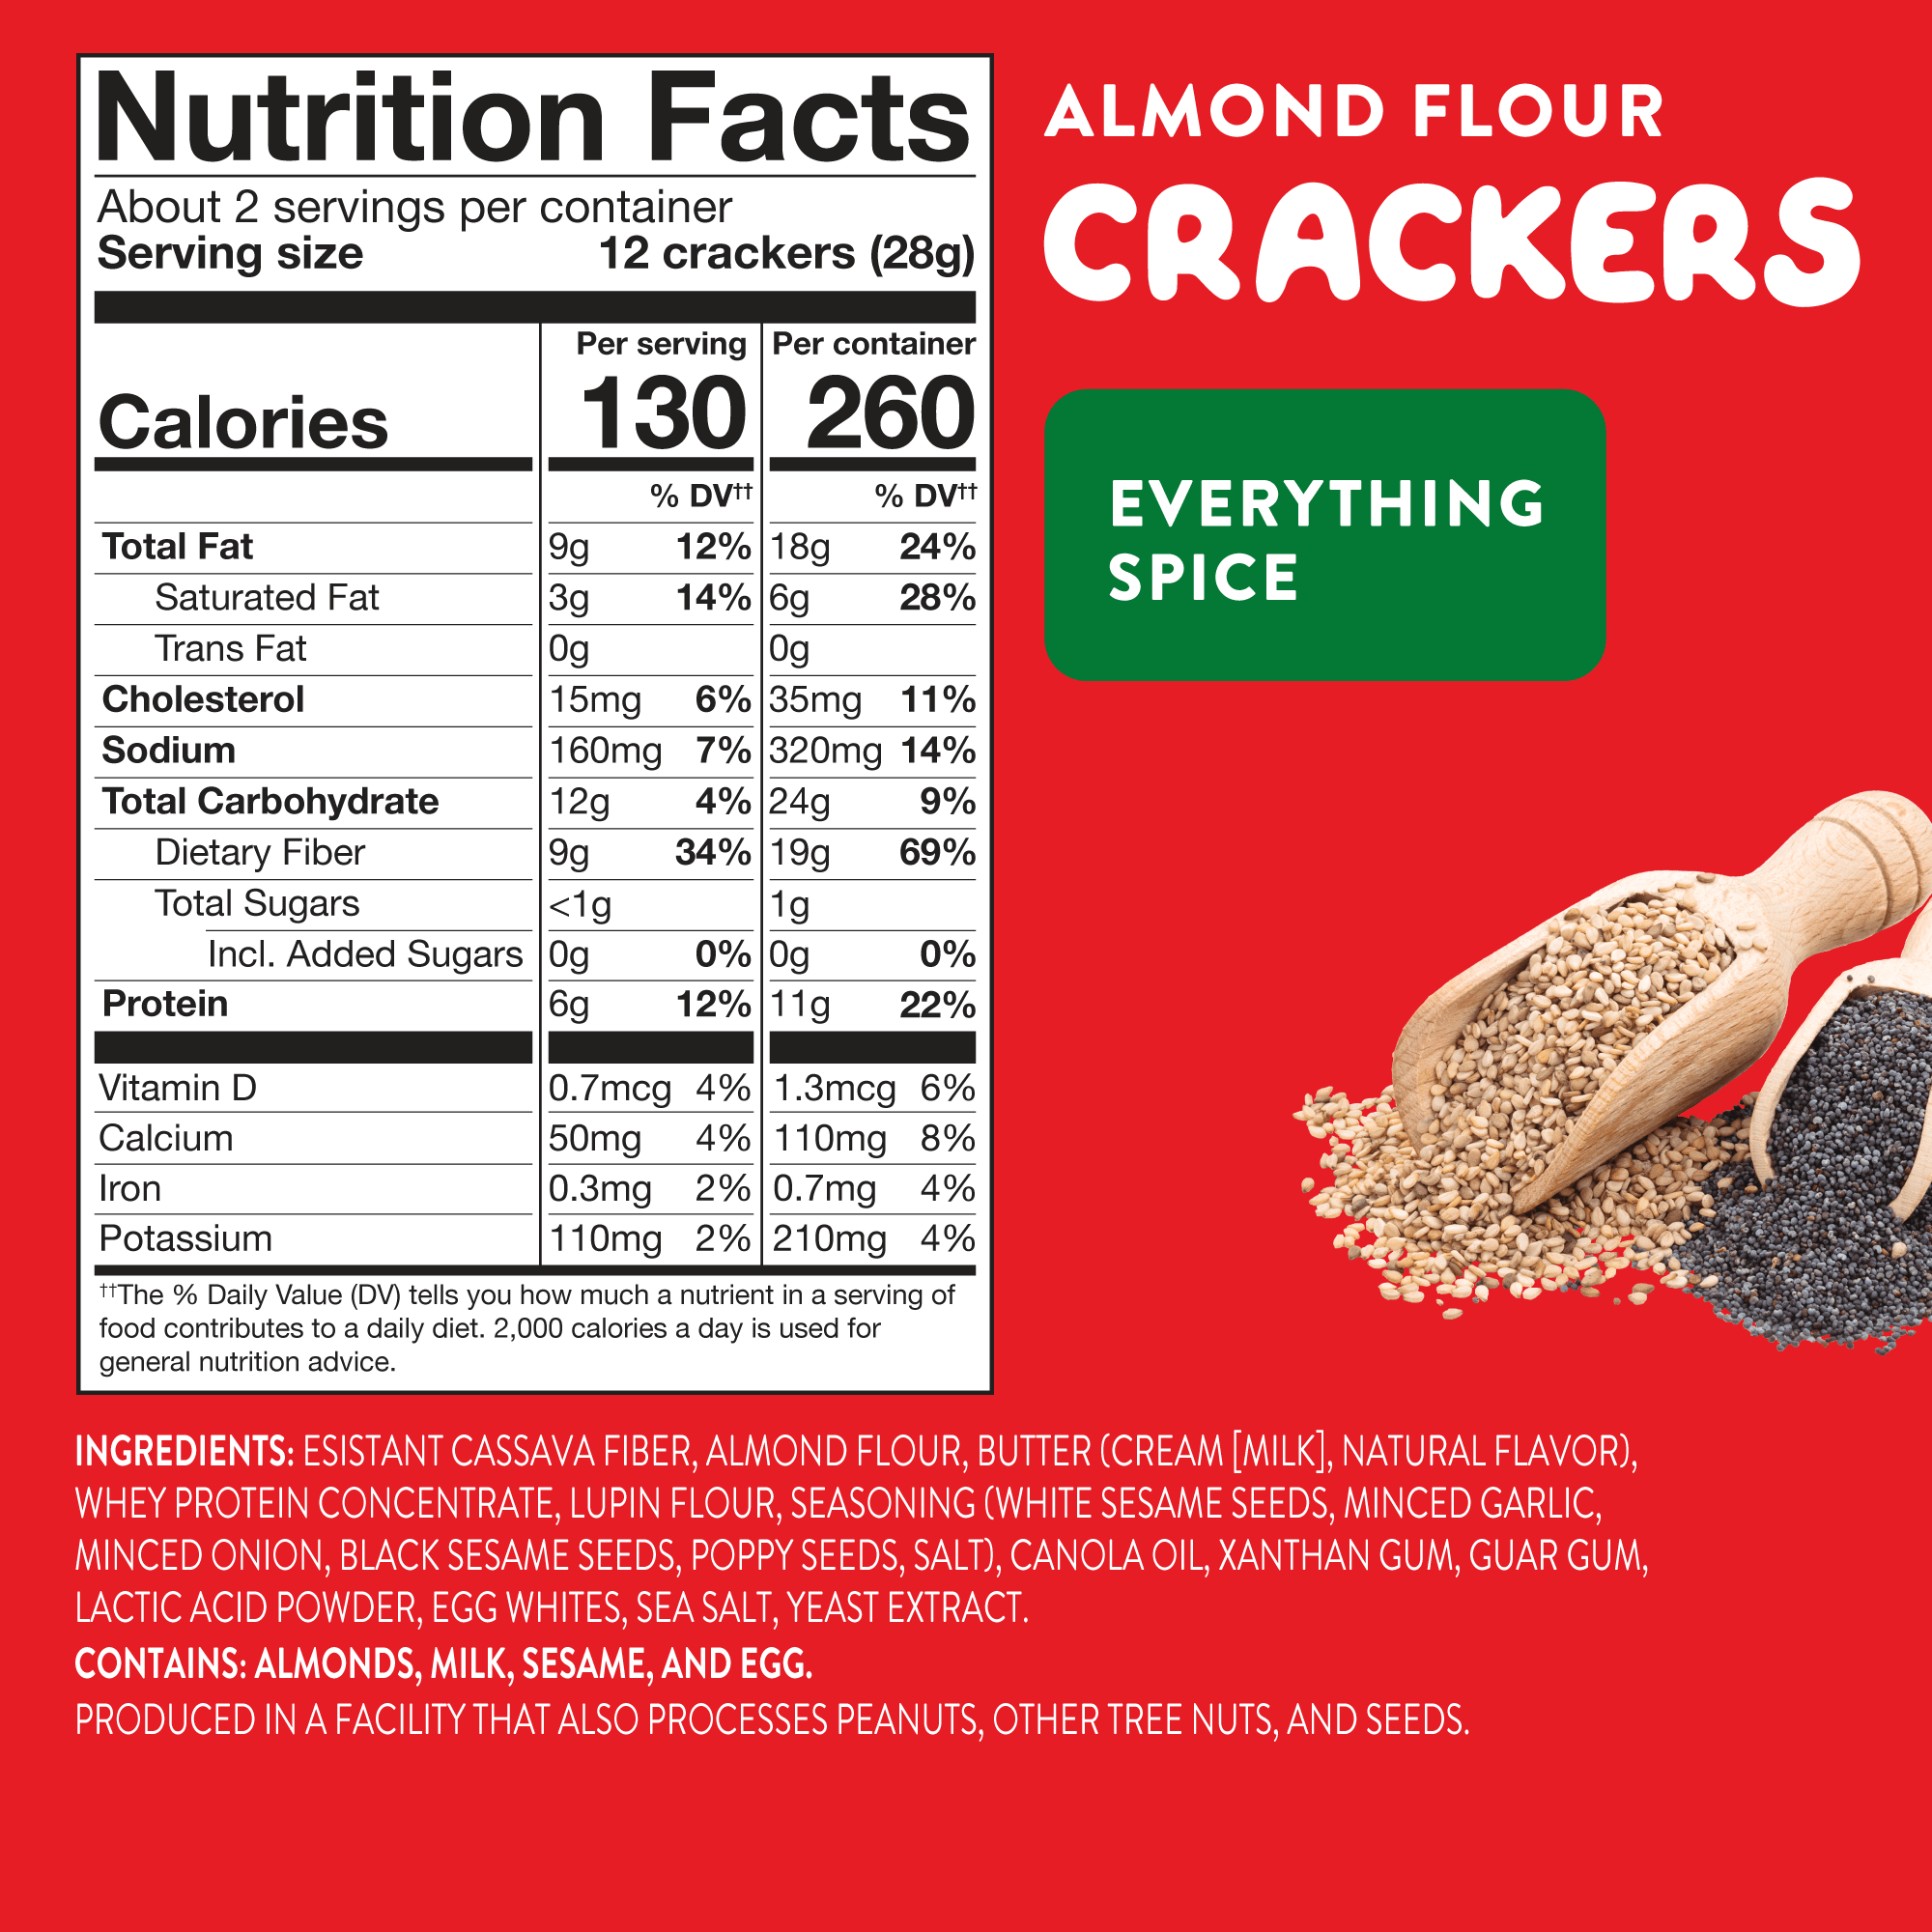 Almond Flour Crackers: Everything